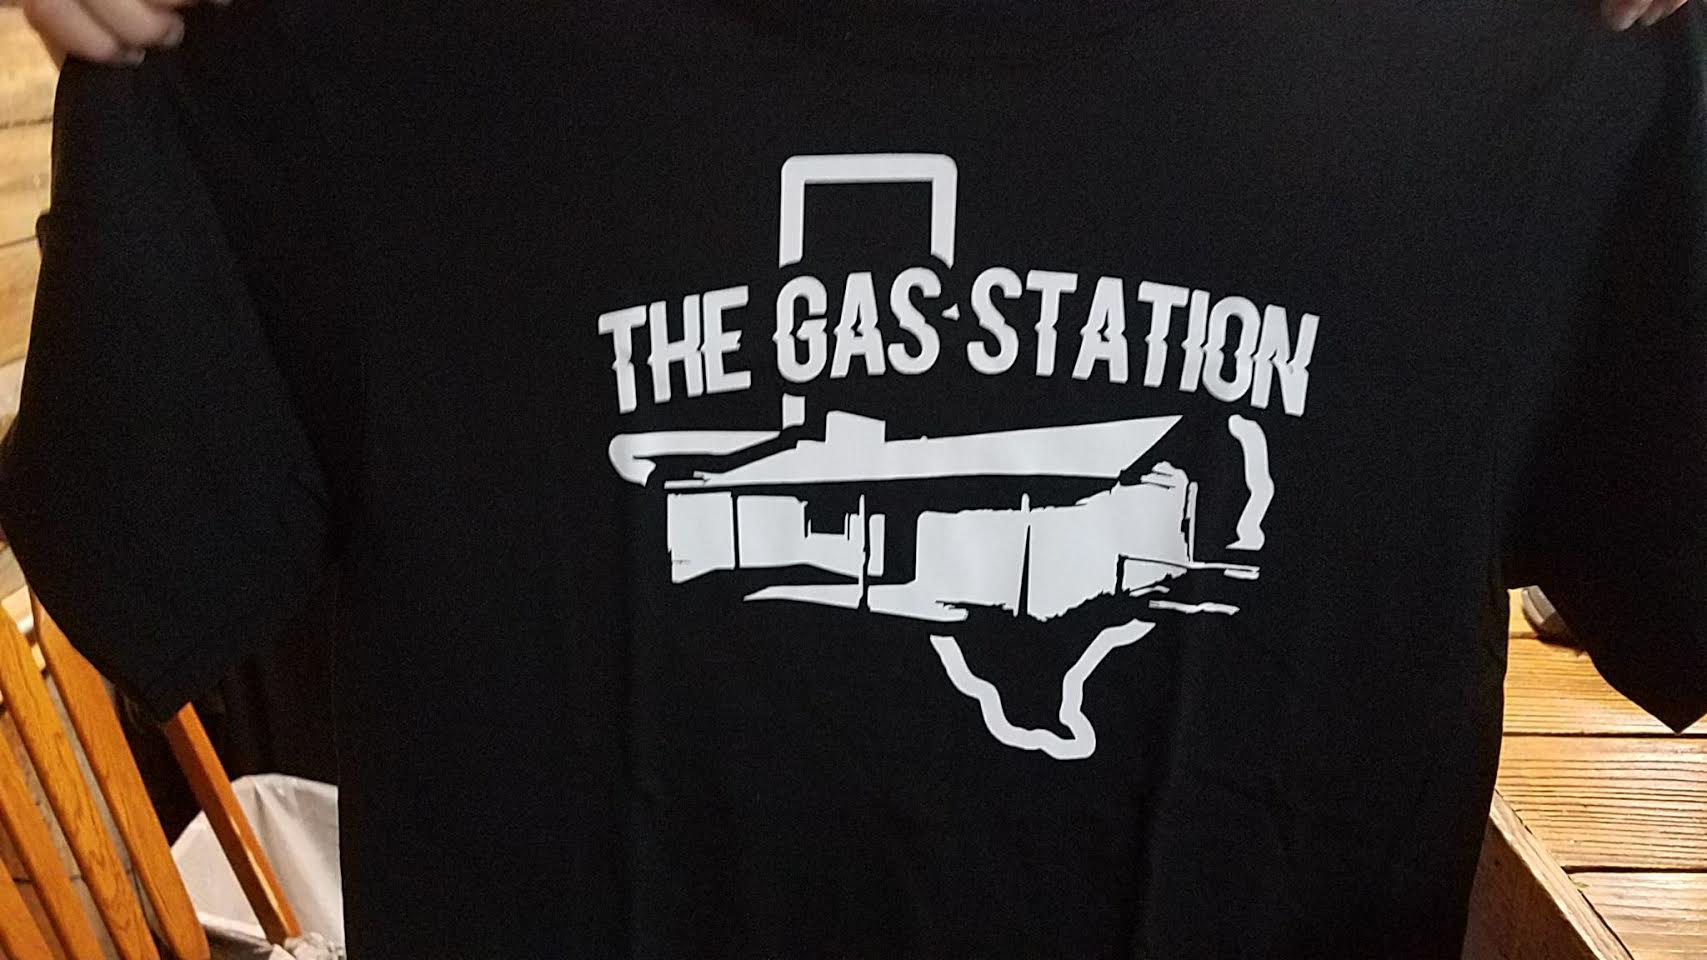 Texas Station Logo - The Gas Station Texas Logo